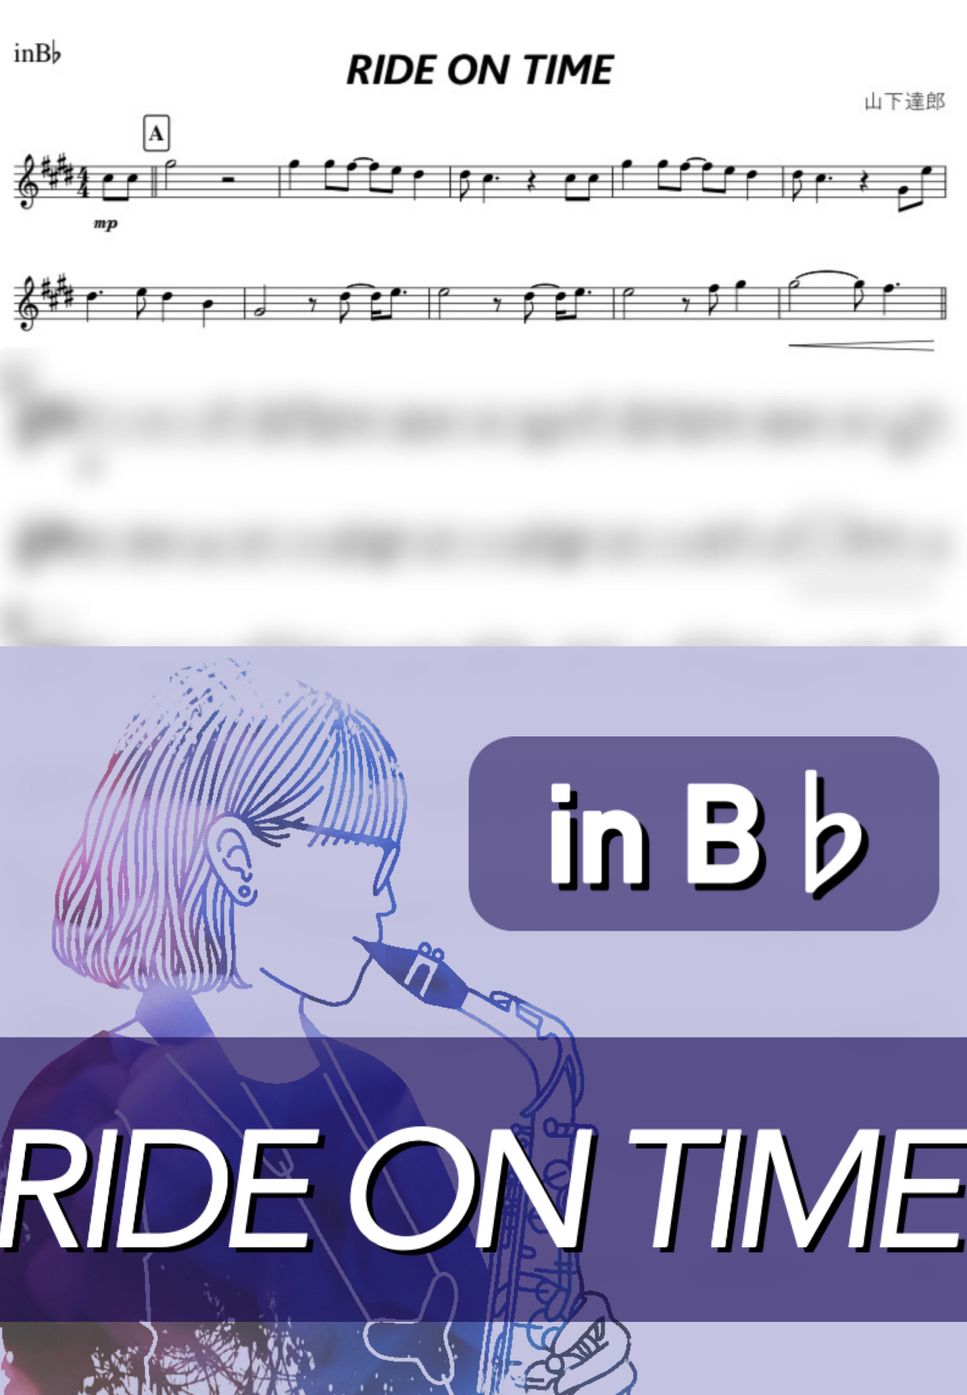 山下達郎 - RIDE ON TIME (B♭) by kanamusic